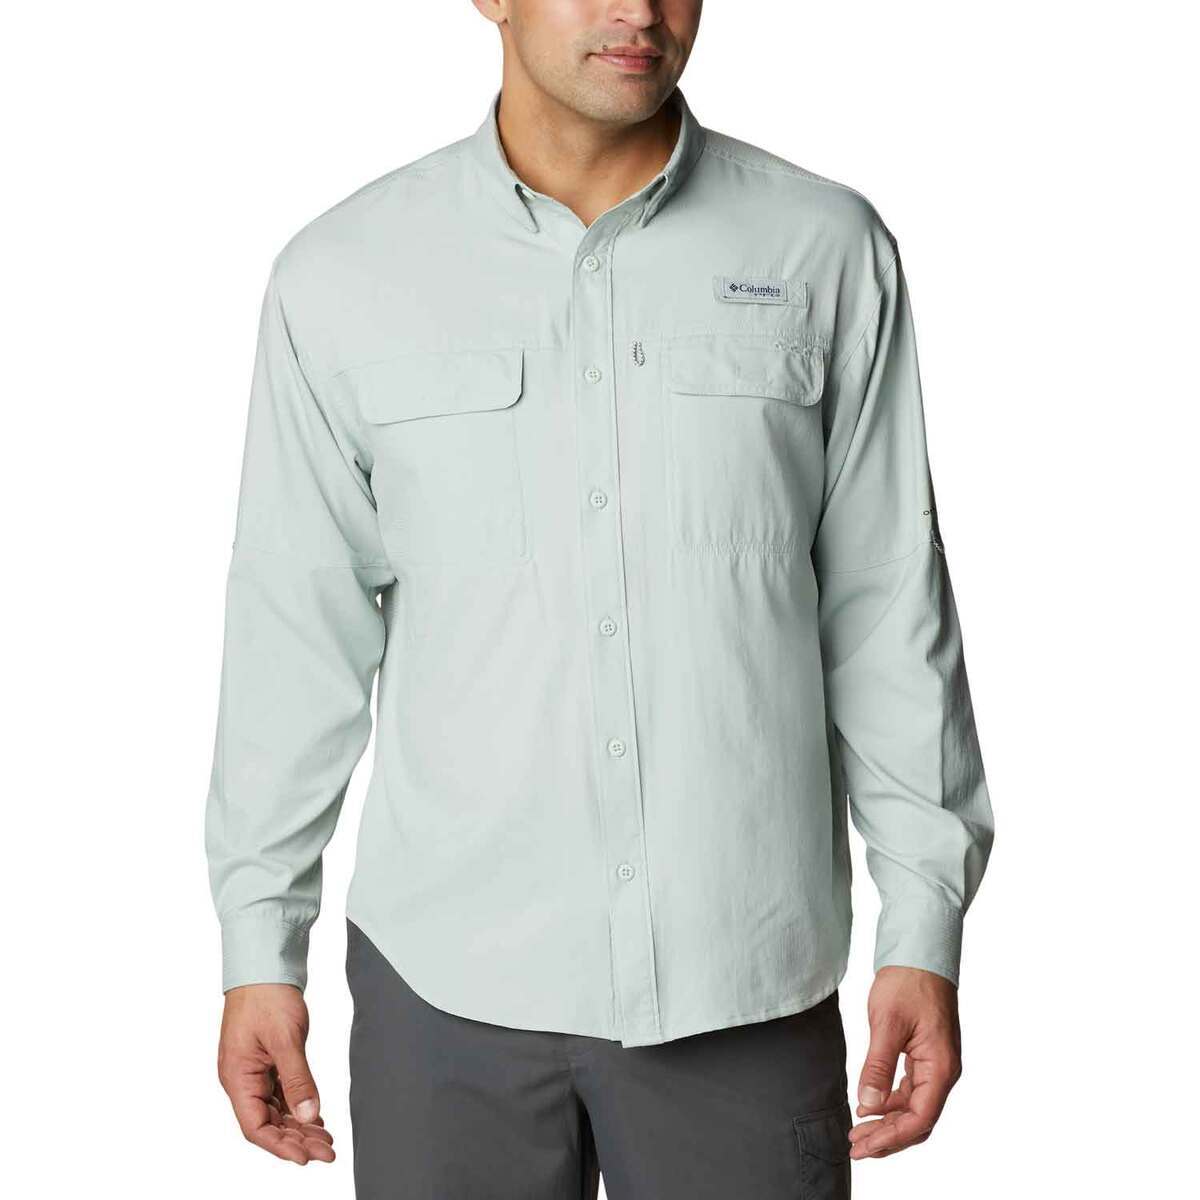 Columbia Men's PFG Skiff Guide Woven Long Sleeve Fishing Shirt - Cool Green L by Sportsman's Warehouse